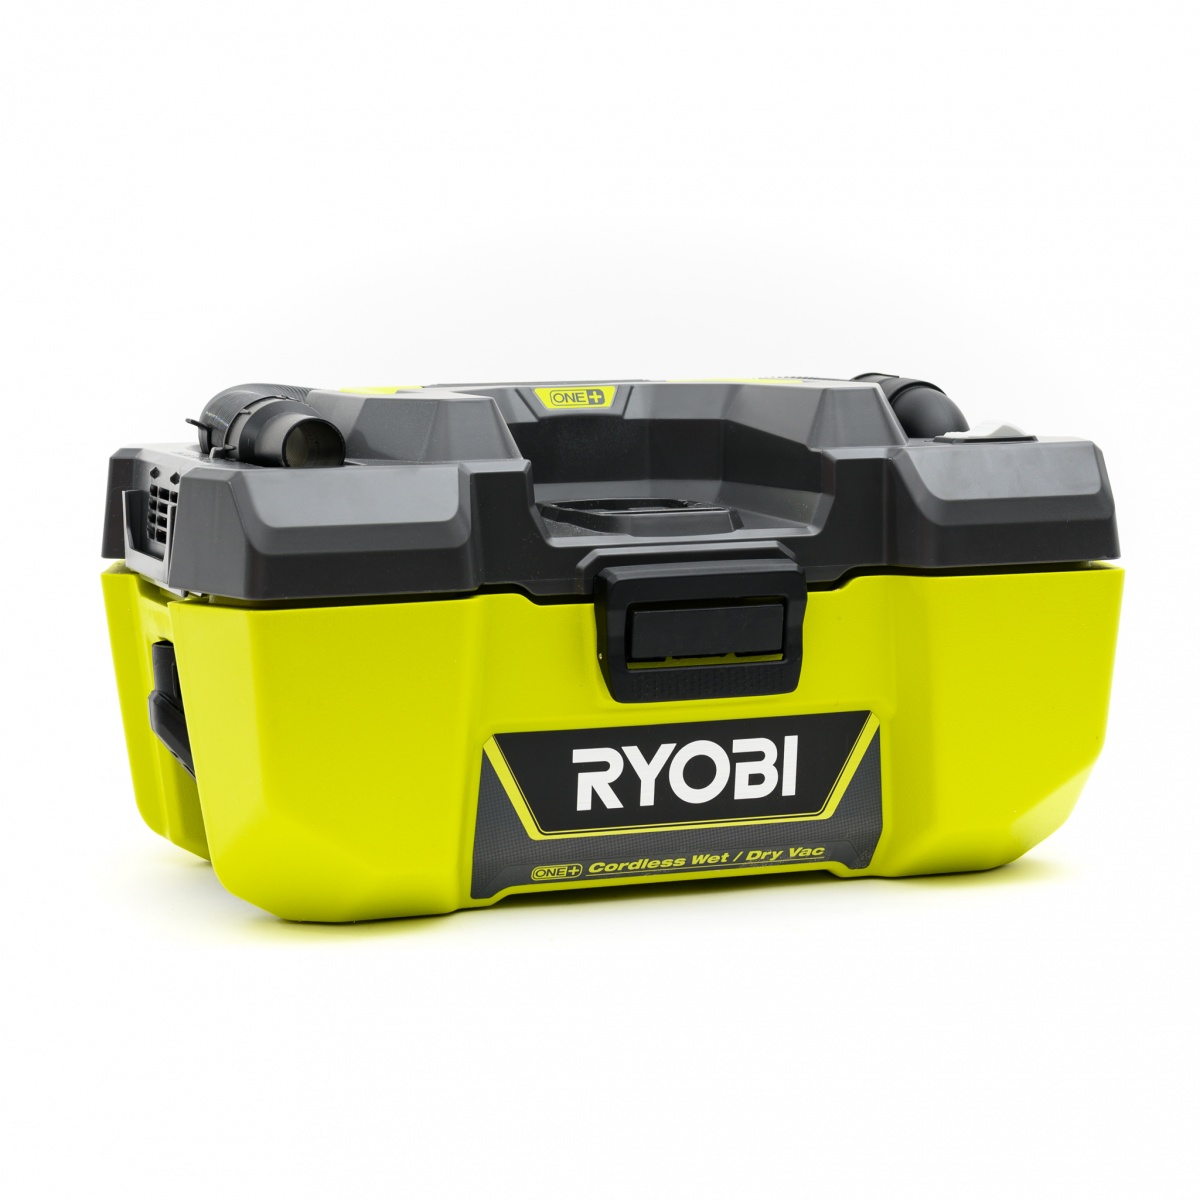 ryobi p3240 cordless wet dry vacuum review